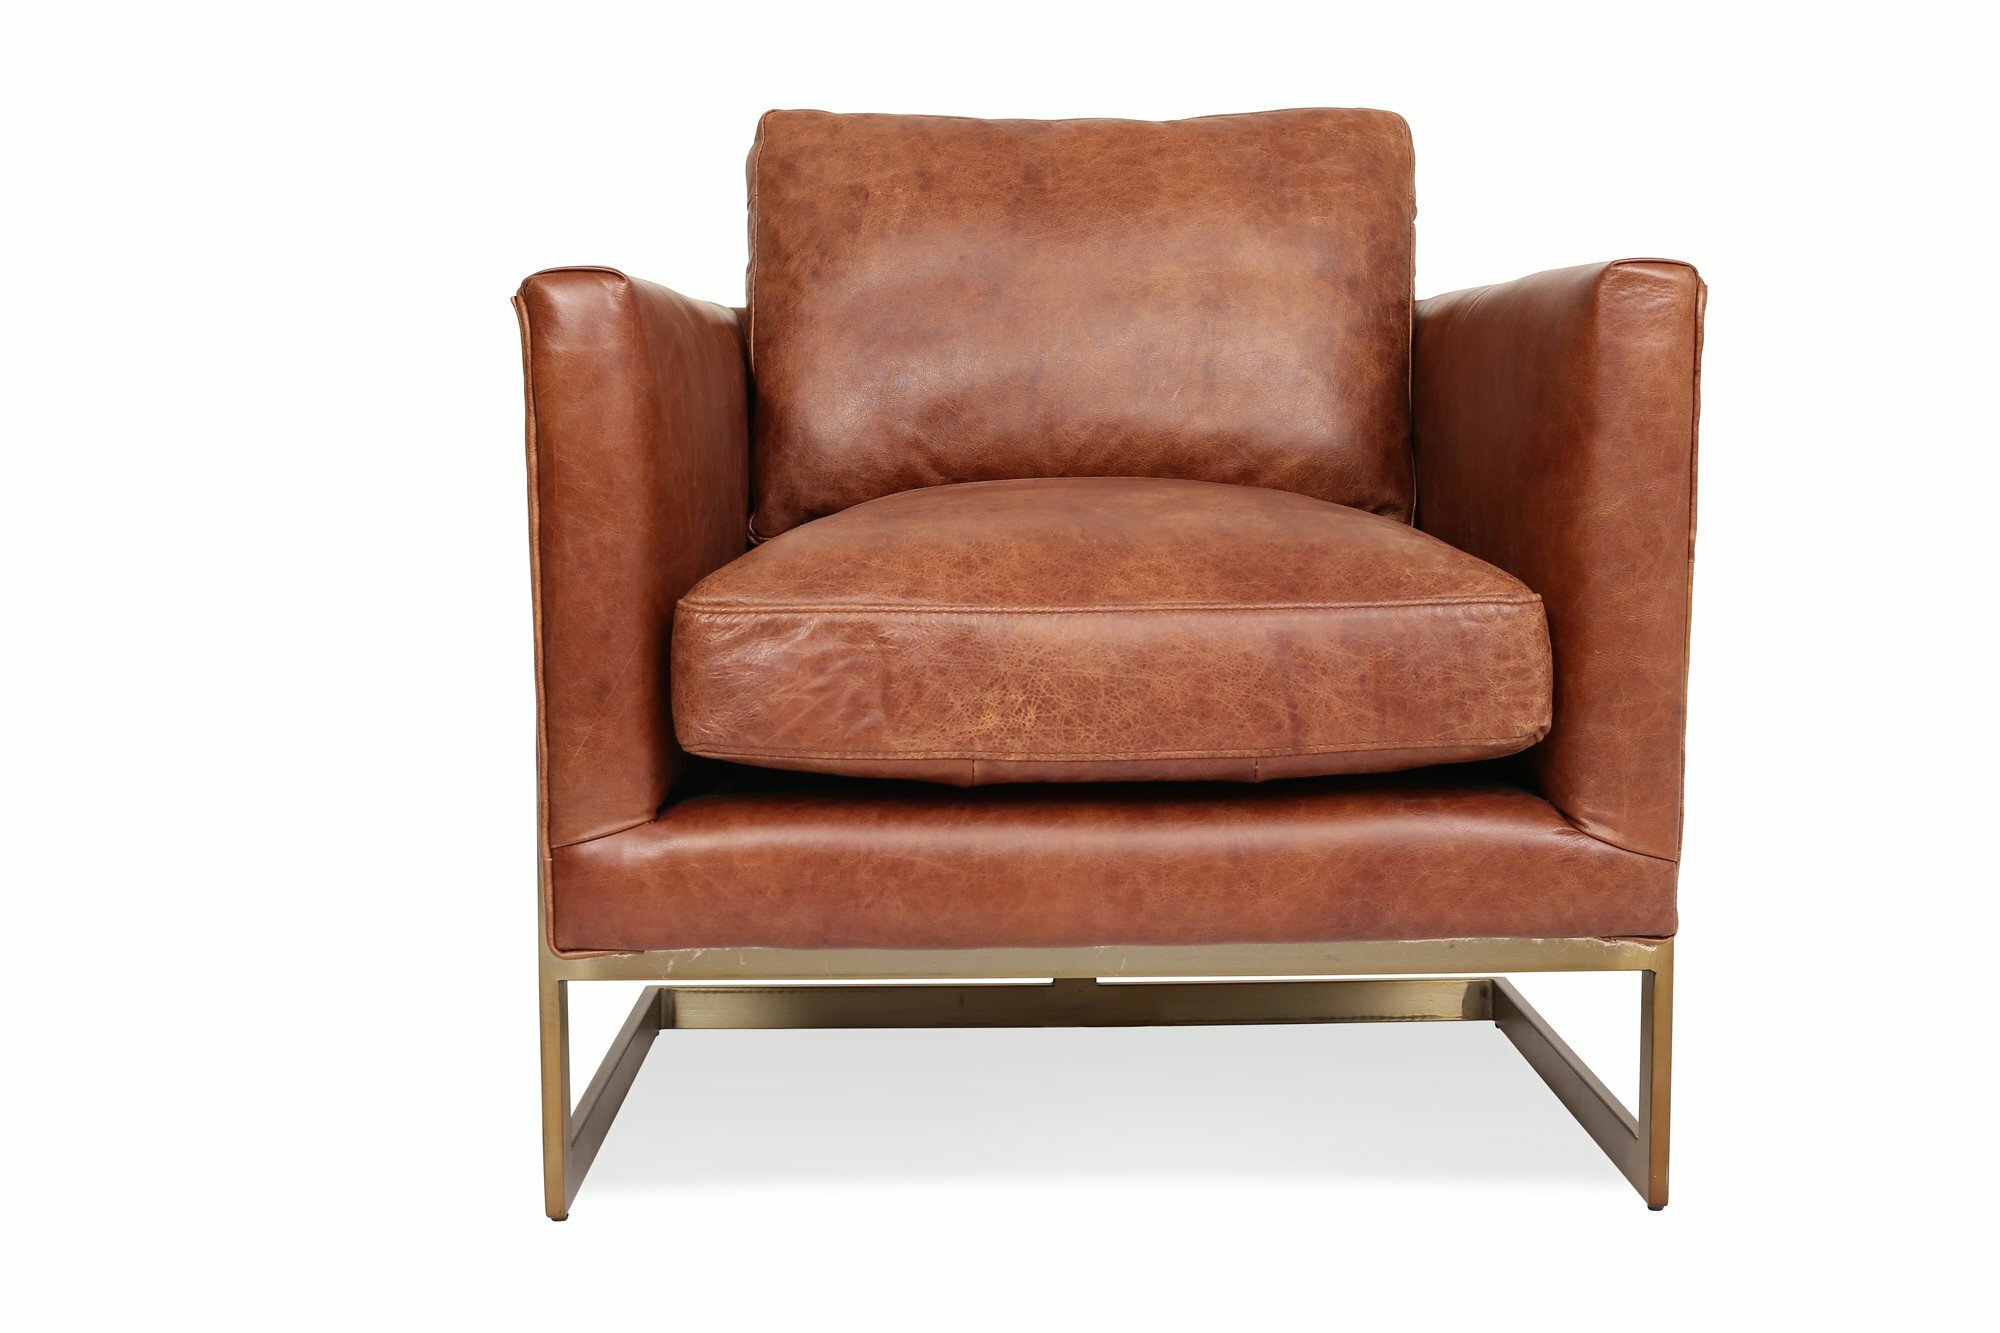 Allmodern Carleen 31 Wide Genuine Leather Top Grain Leather Lounge Chair Reviews Wayfair